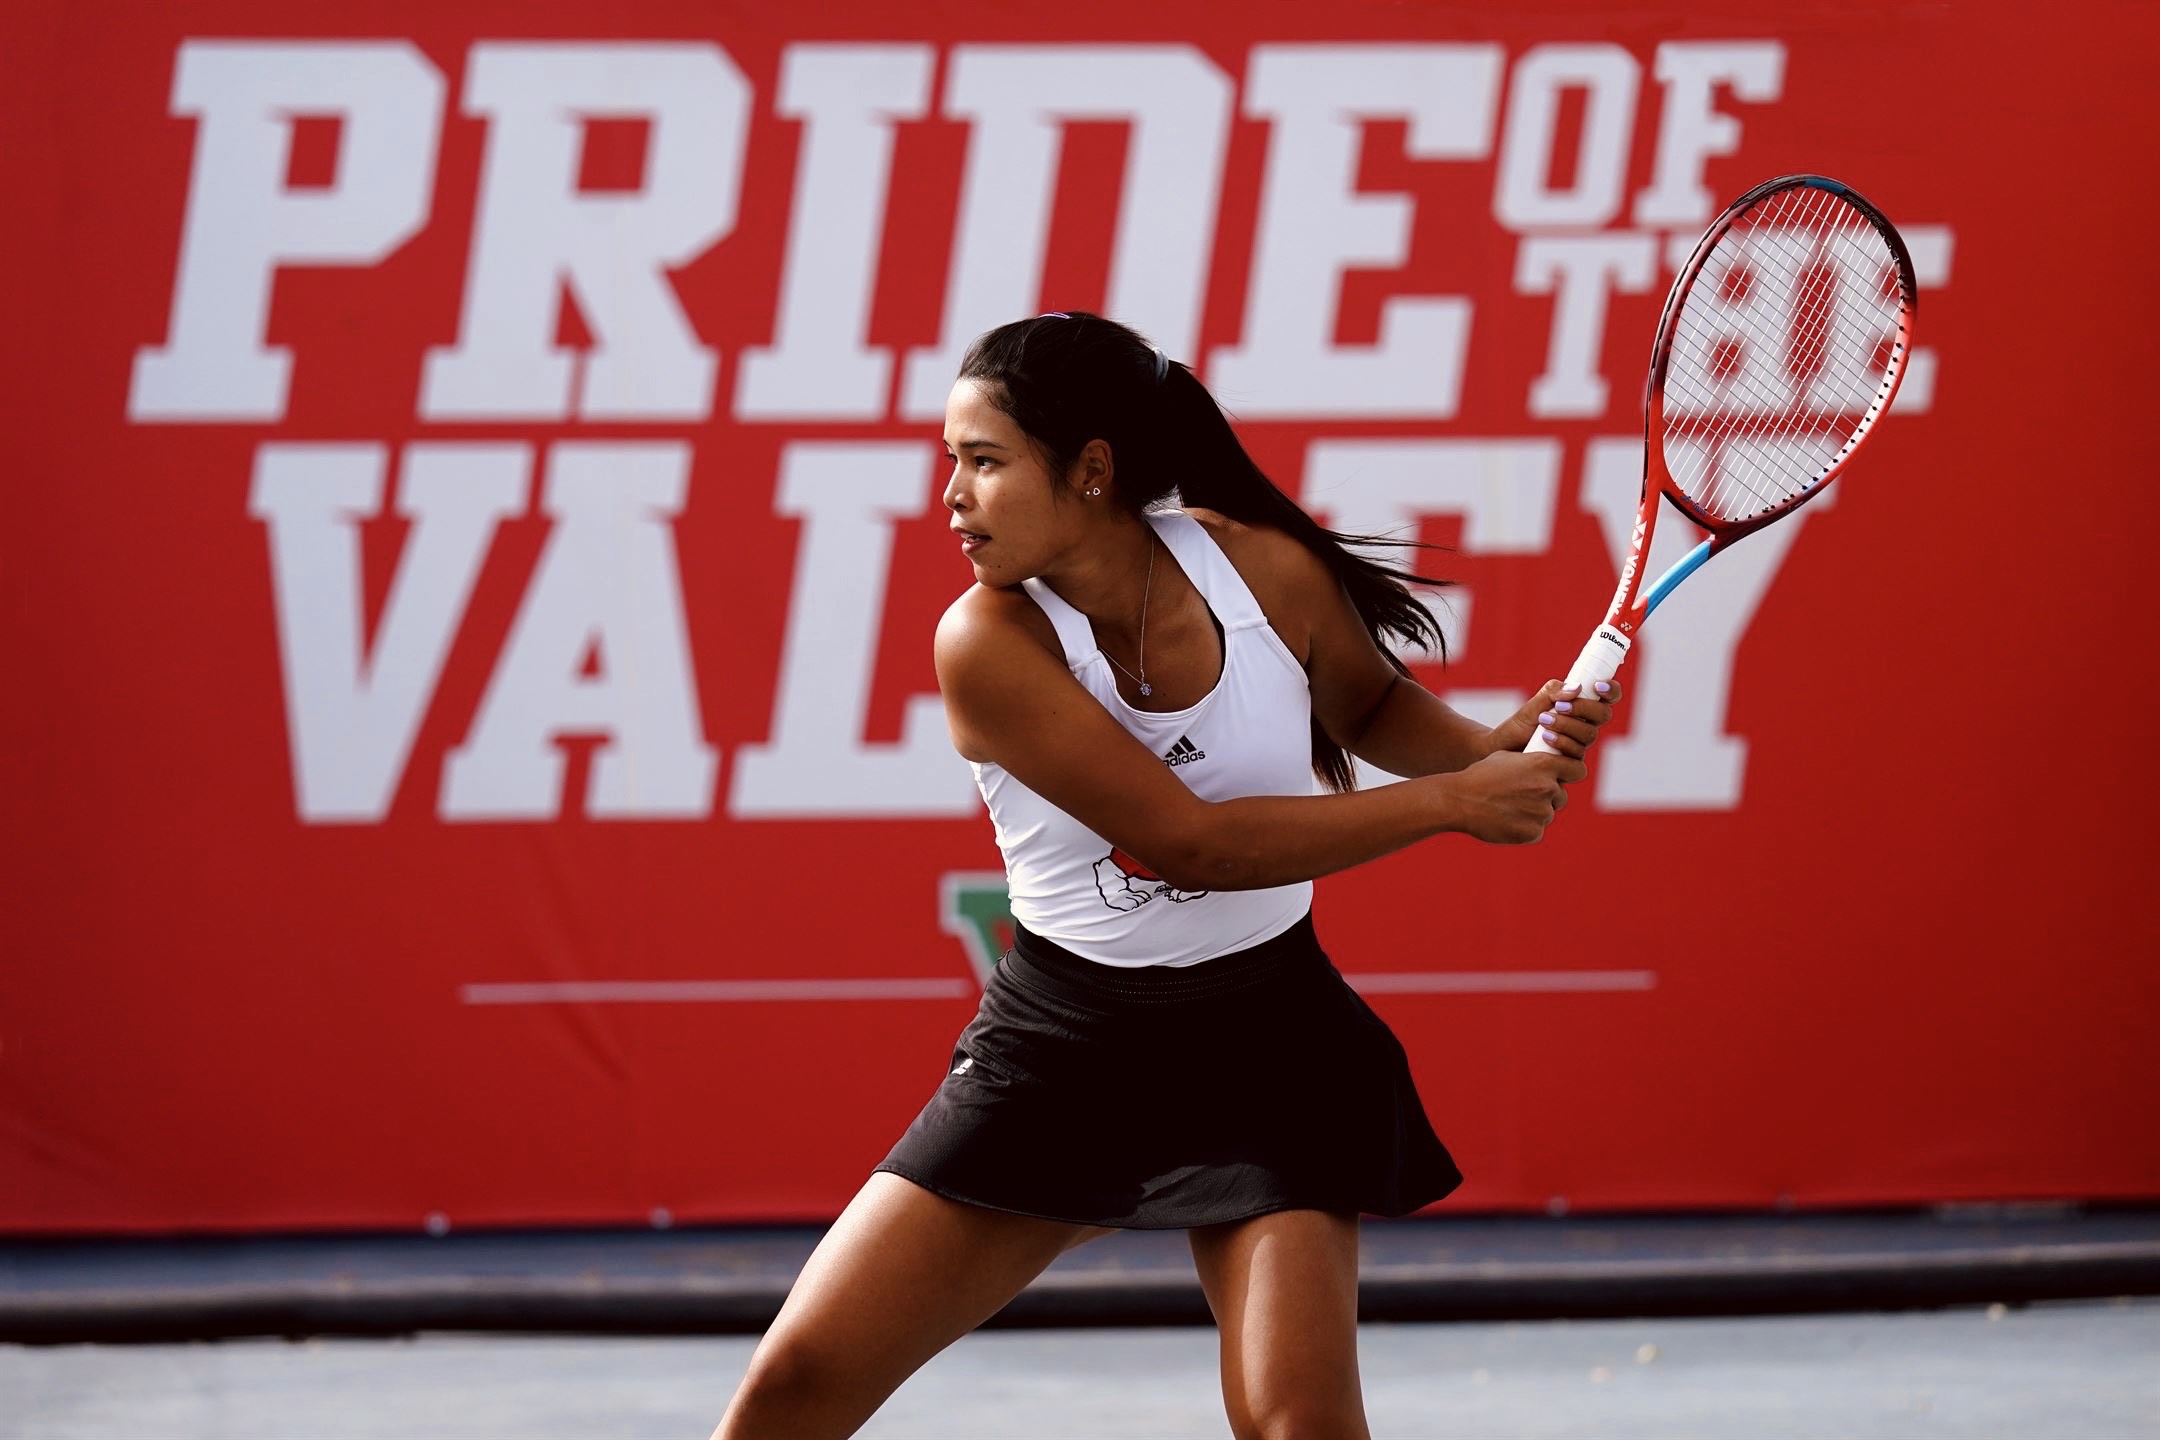 Yinglak Jittakoat plays tennis